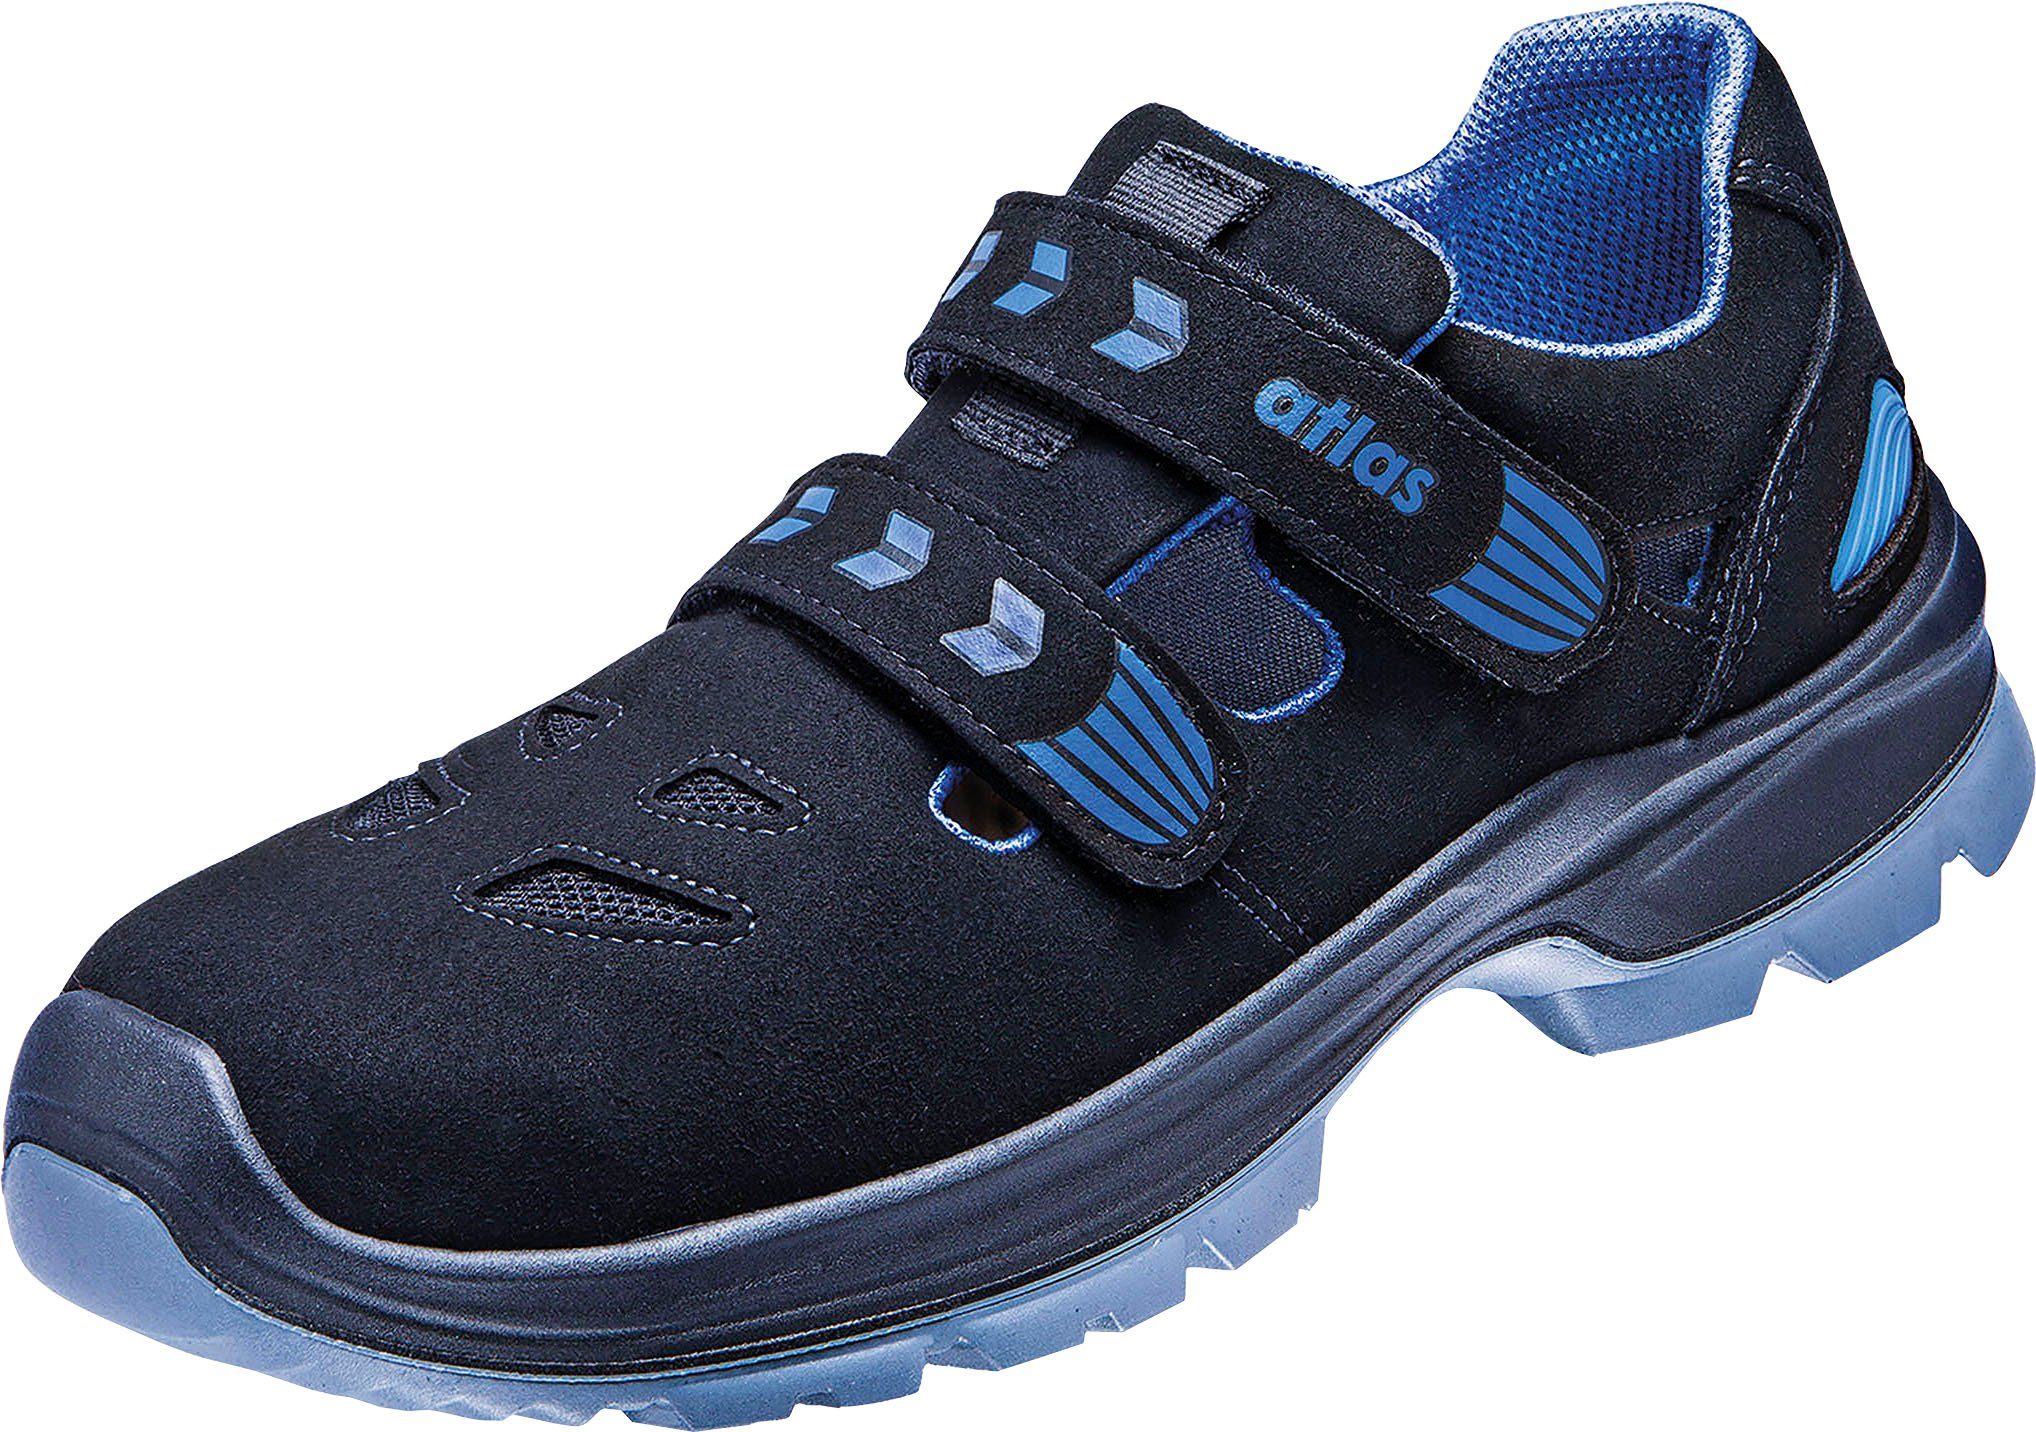 Atlas Schuhe Ergo-Med 360 Sicherheitsschuh Sandale, Schuhweite 14, Sicherheitsklasse S1 | Sicherheitsschuhe